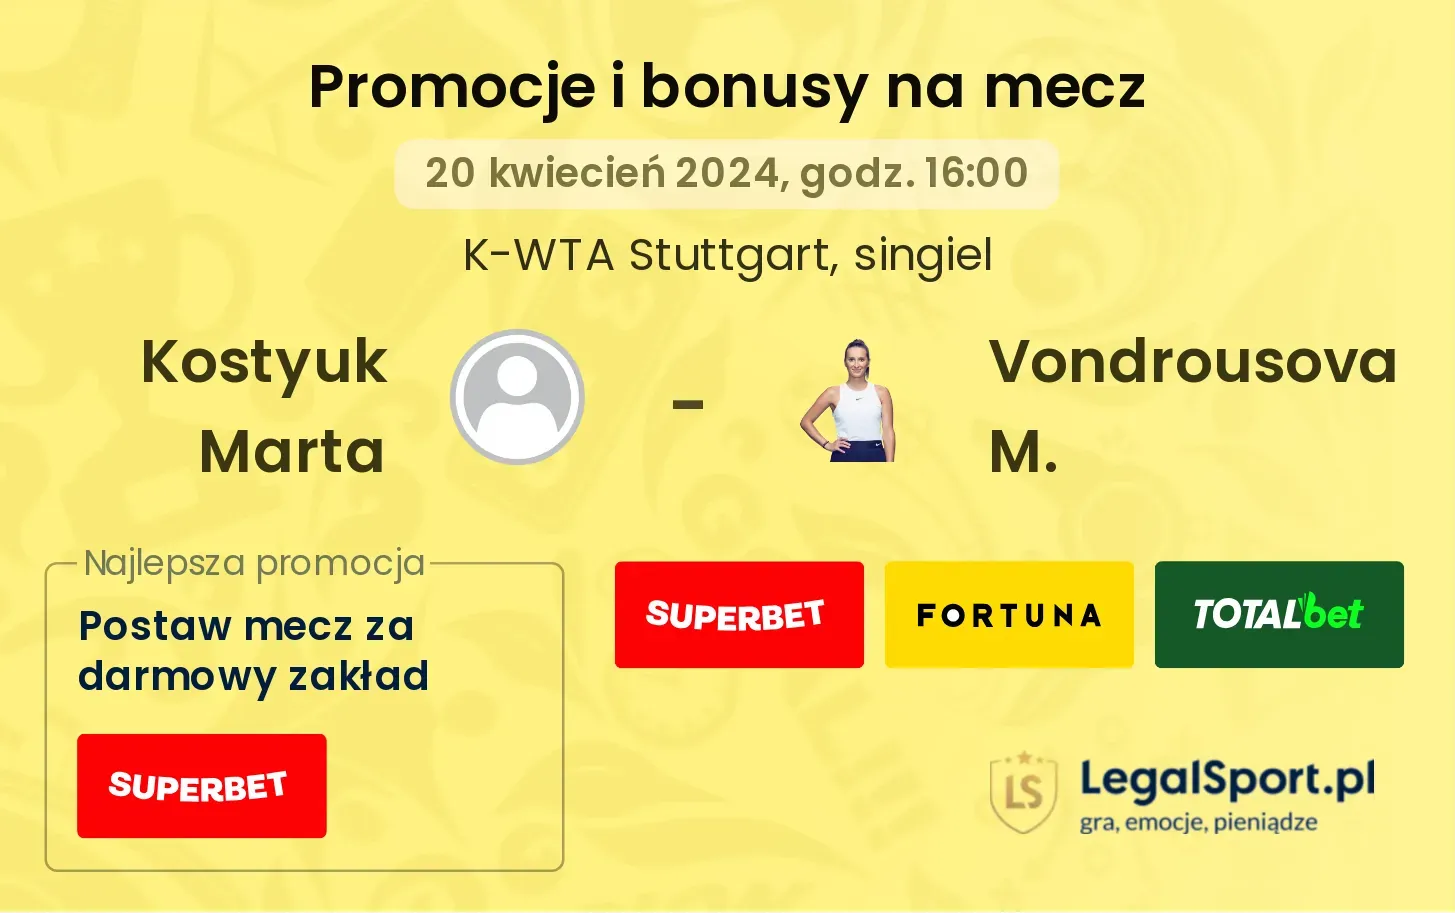 Kostyuk Marta - Vondrousova M. promocje bonusy na mecz